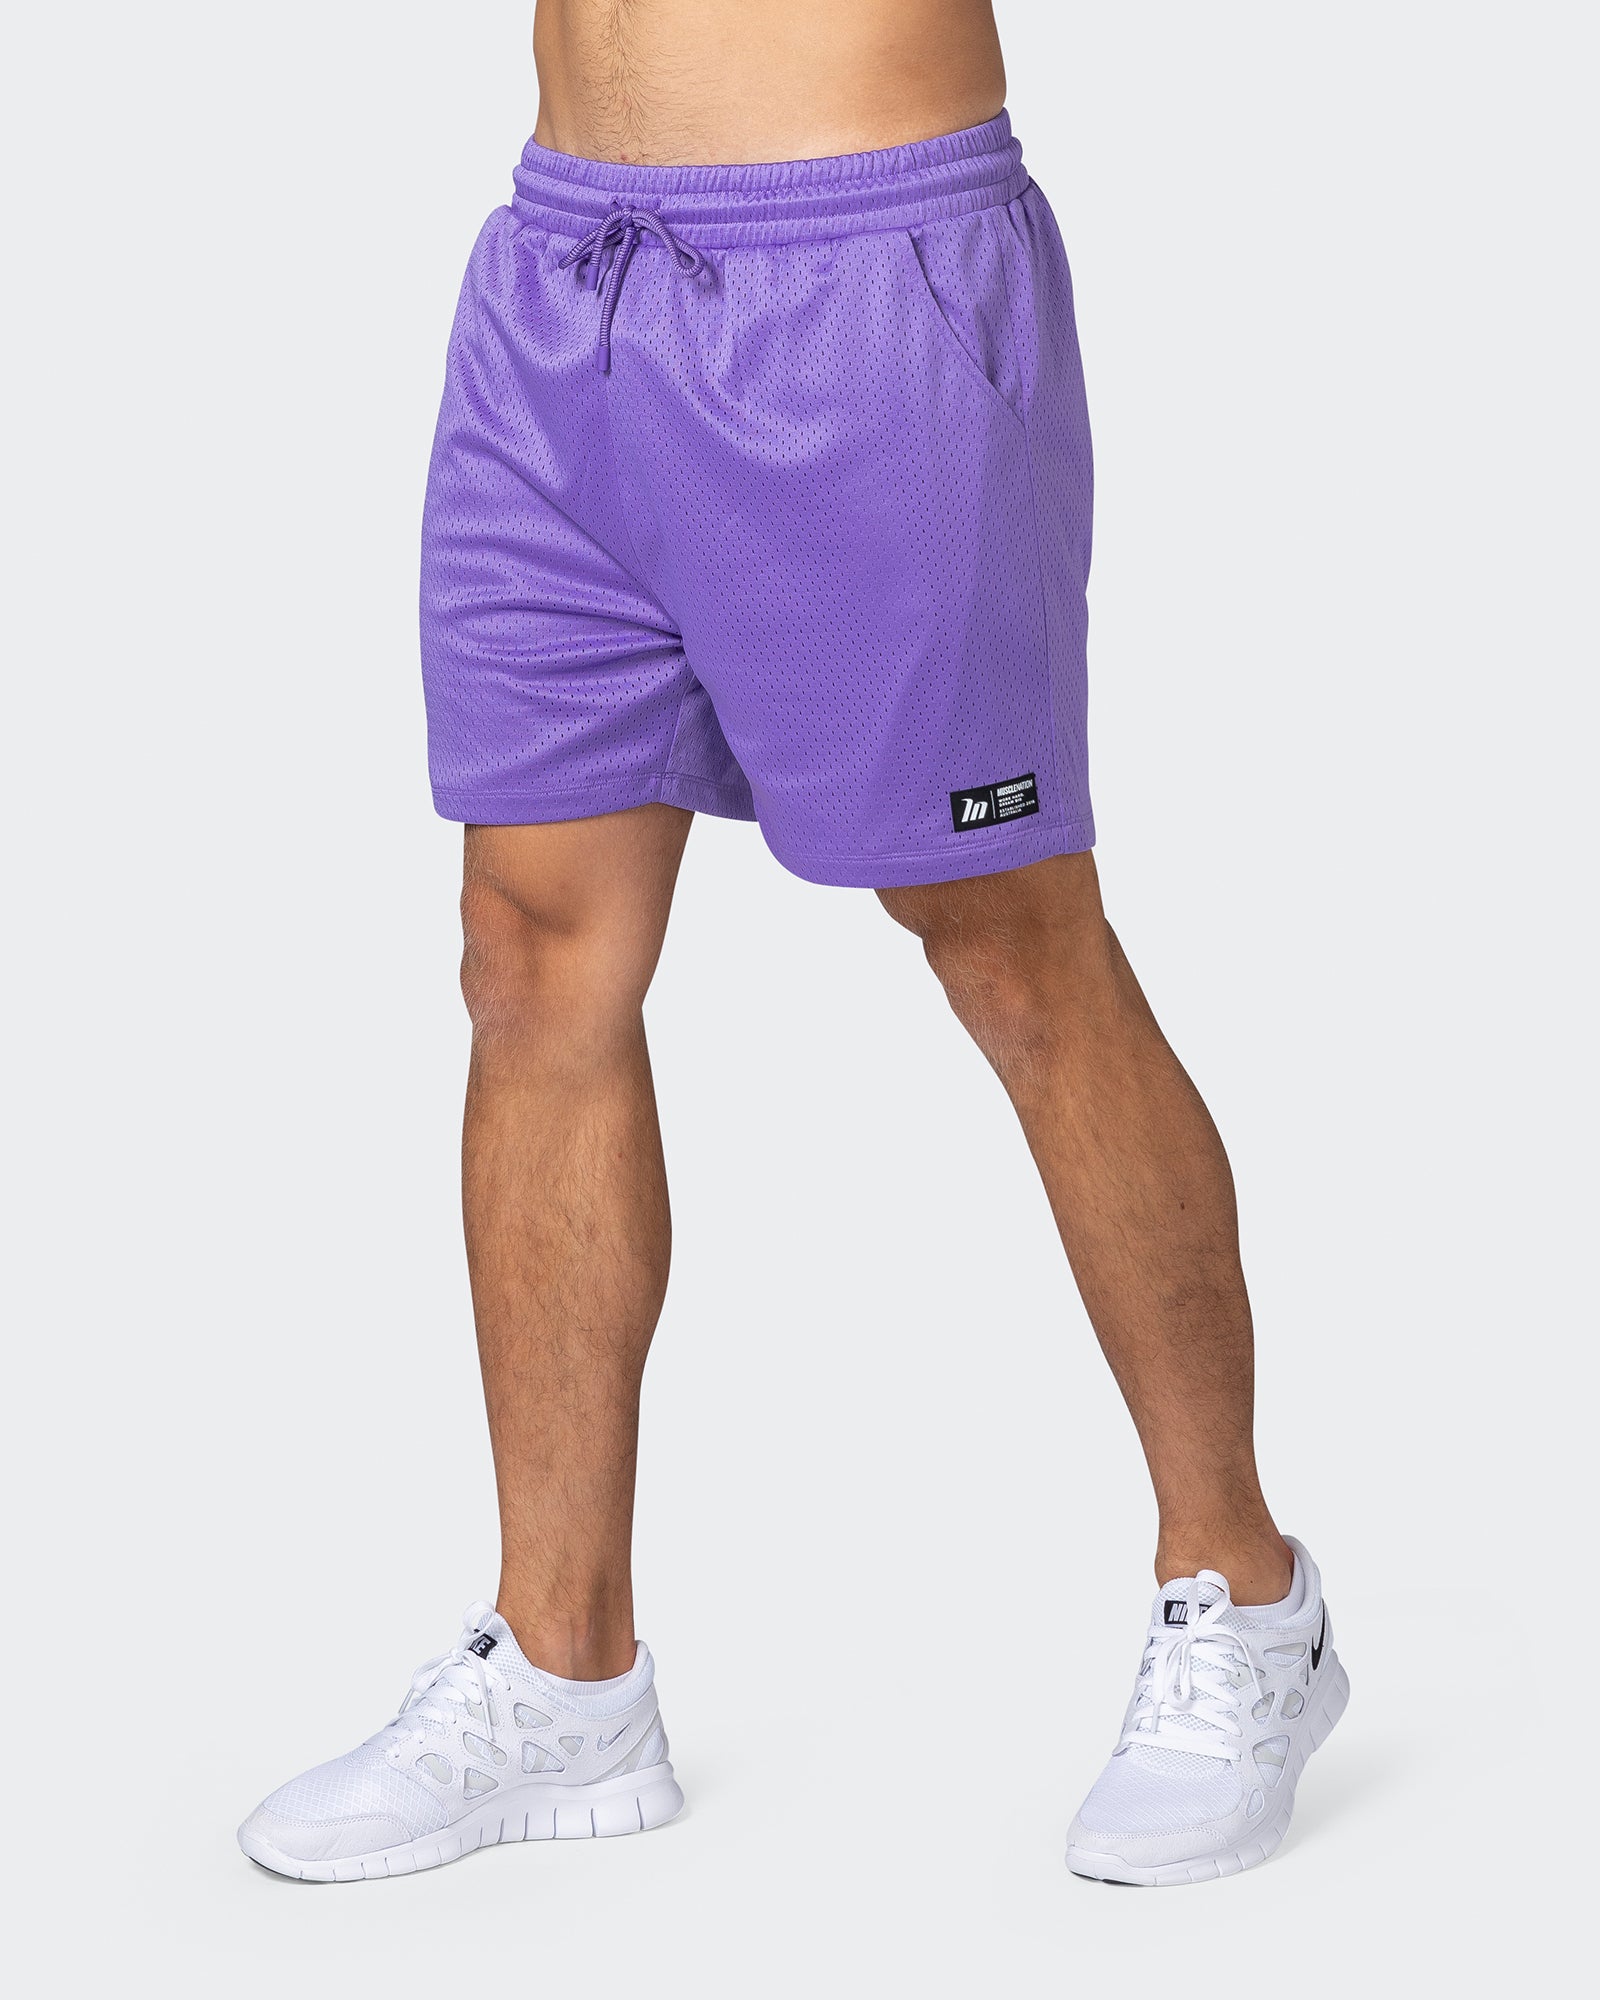 Umbro Tri-Checkered Purple Shorts